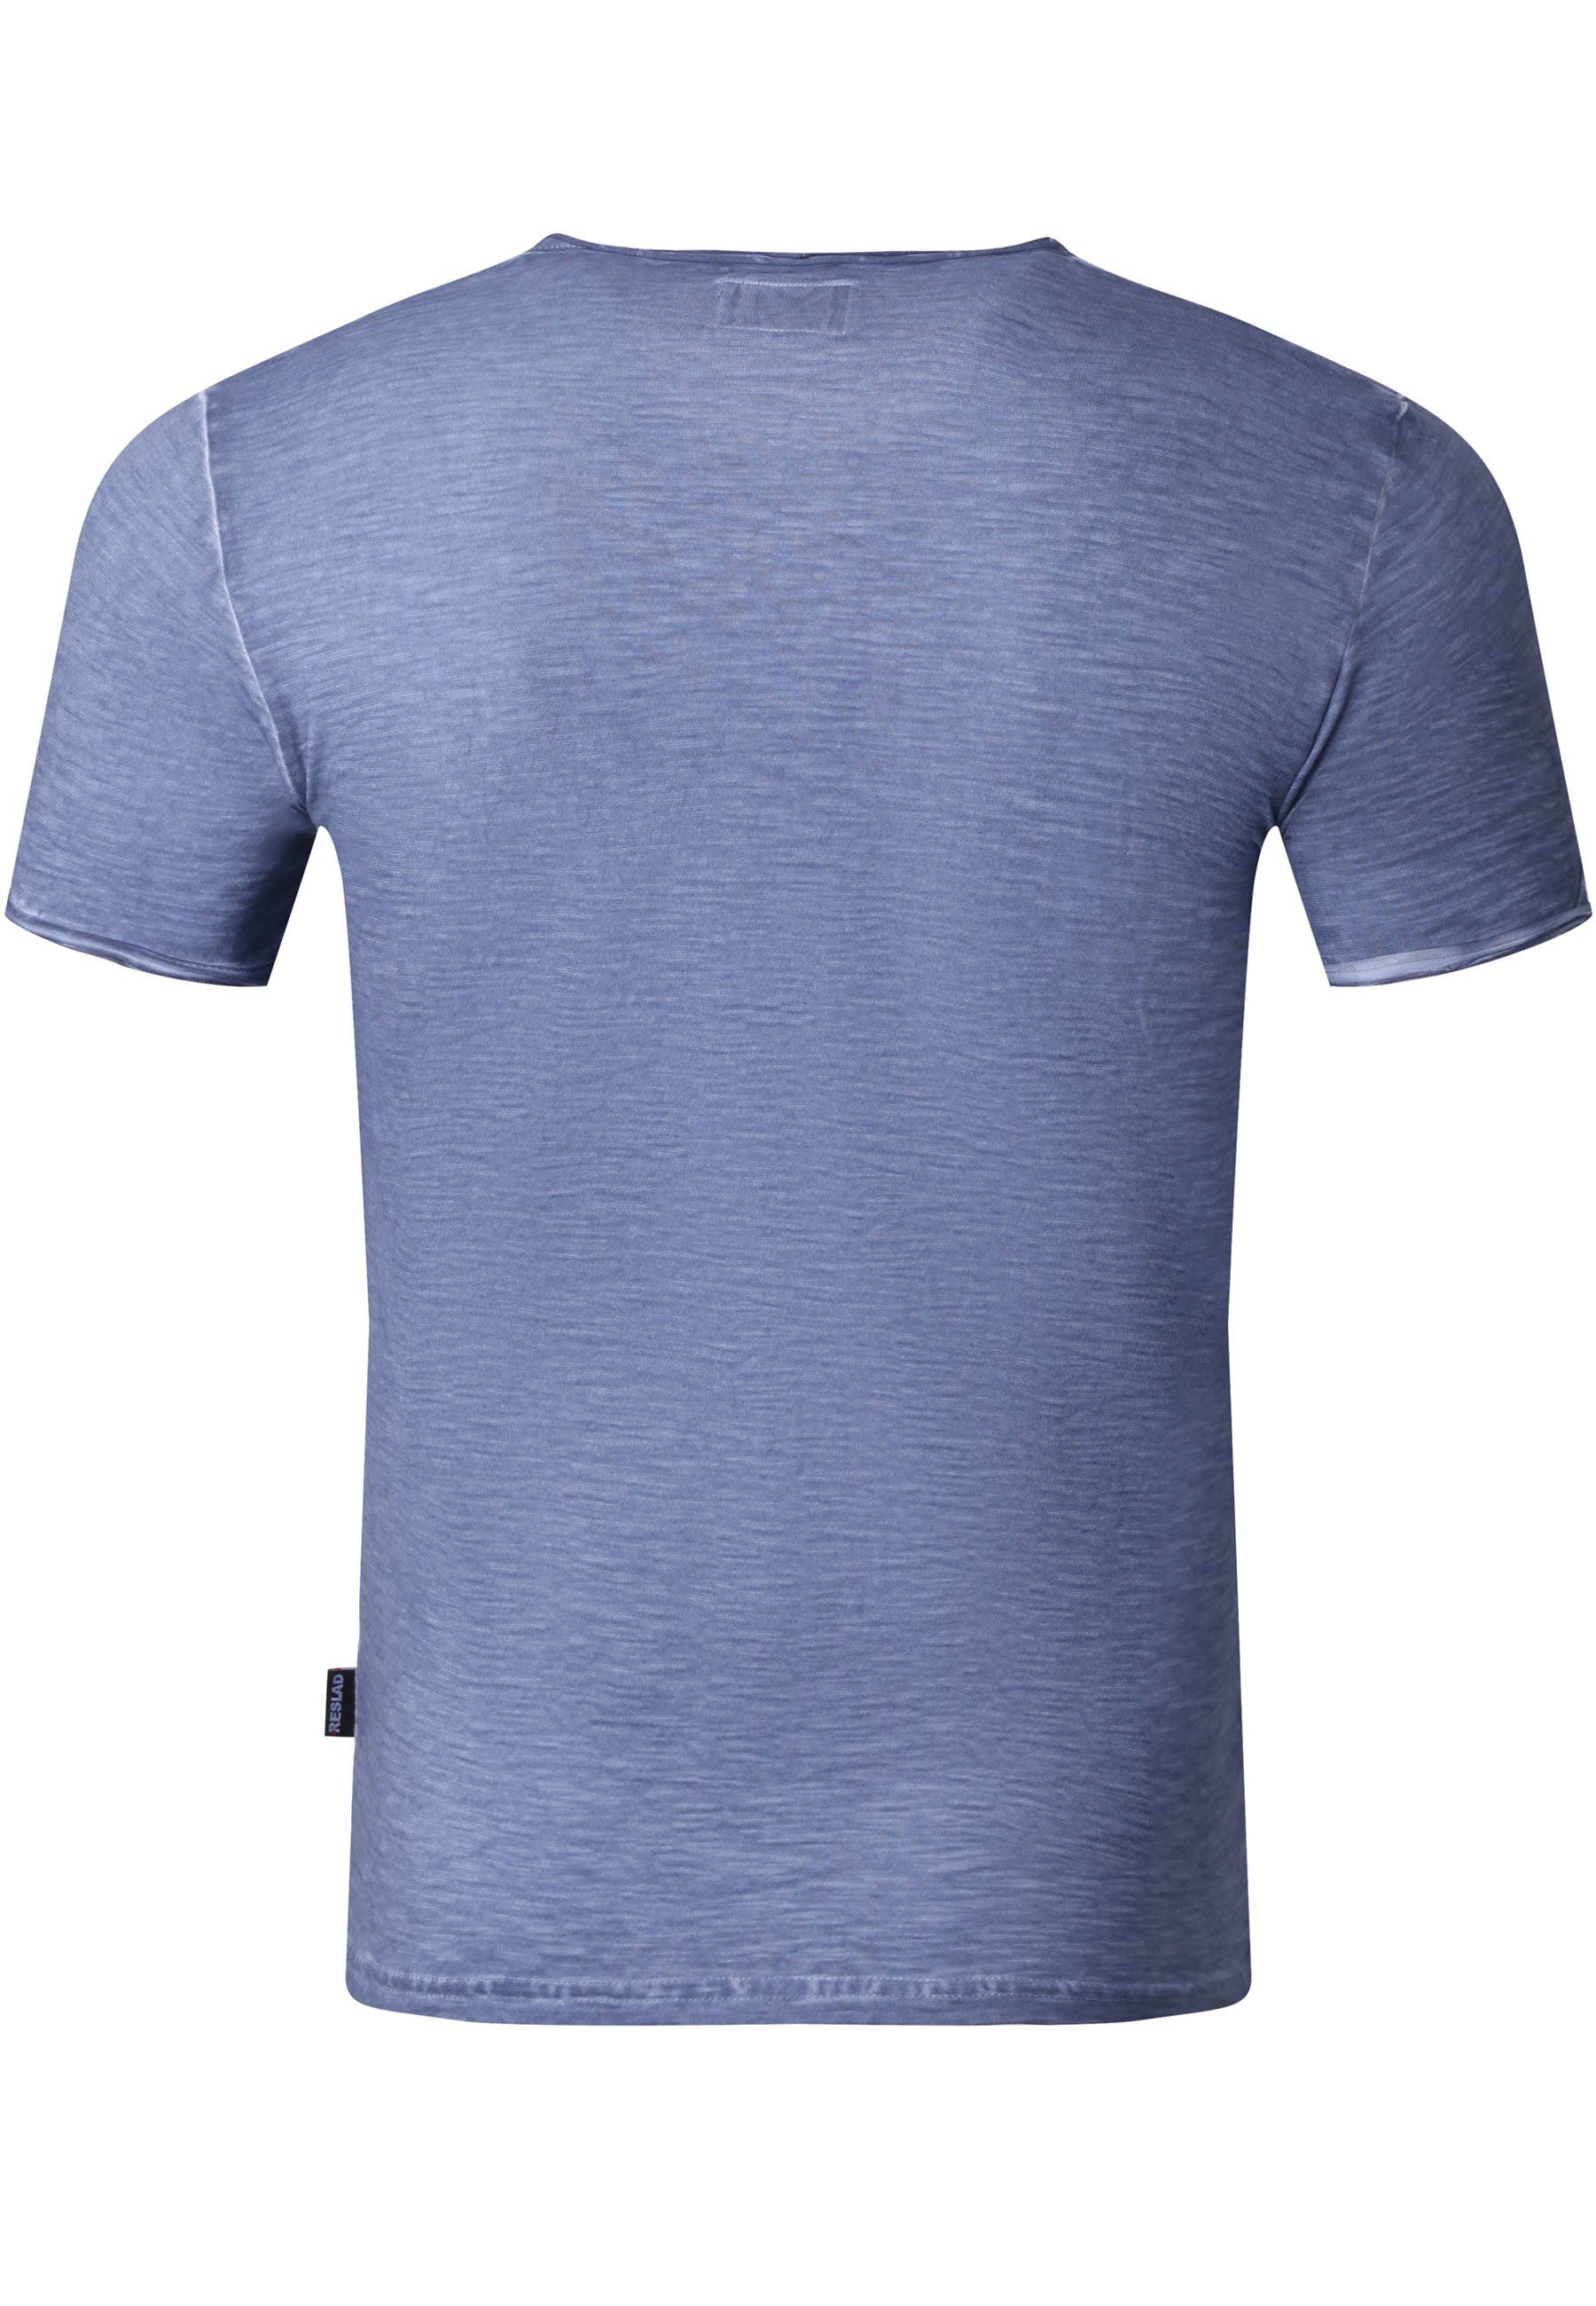 Style Männer Shirt Optik T-Shirt indigo-blau Herren Reslad Vintage Shirt Rundhals Rundhalsausschnitt verwaschen Vintage Reslad Männer T-Shirt (1-tlg)